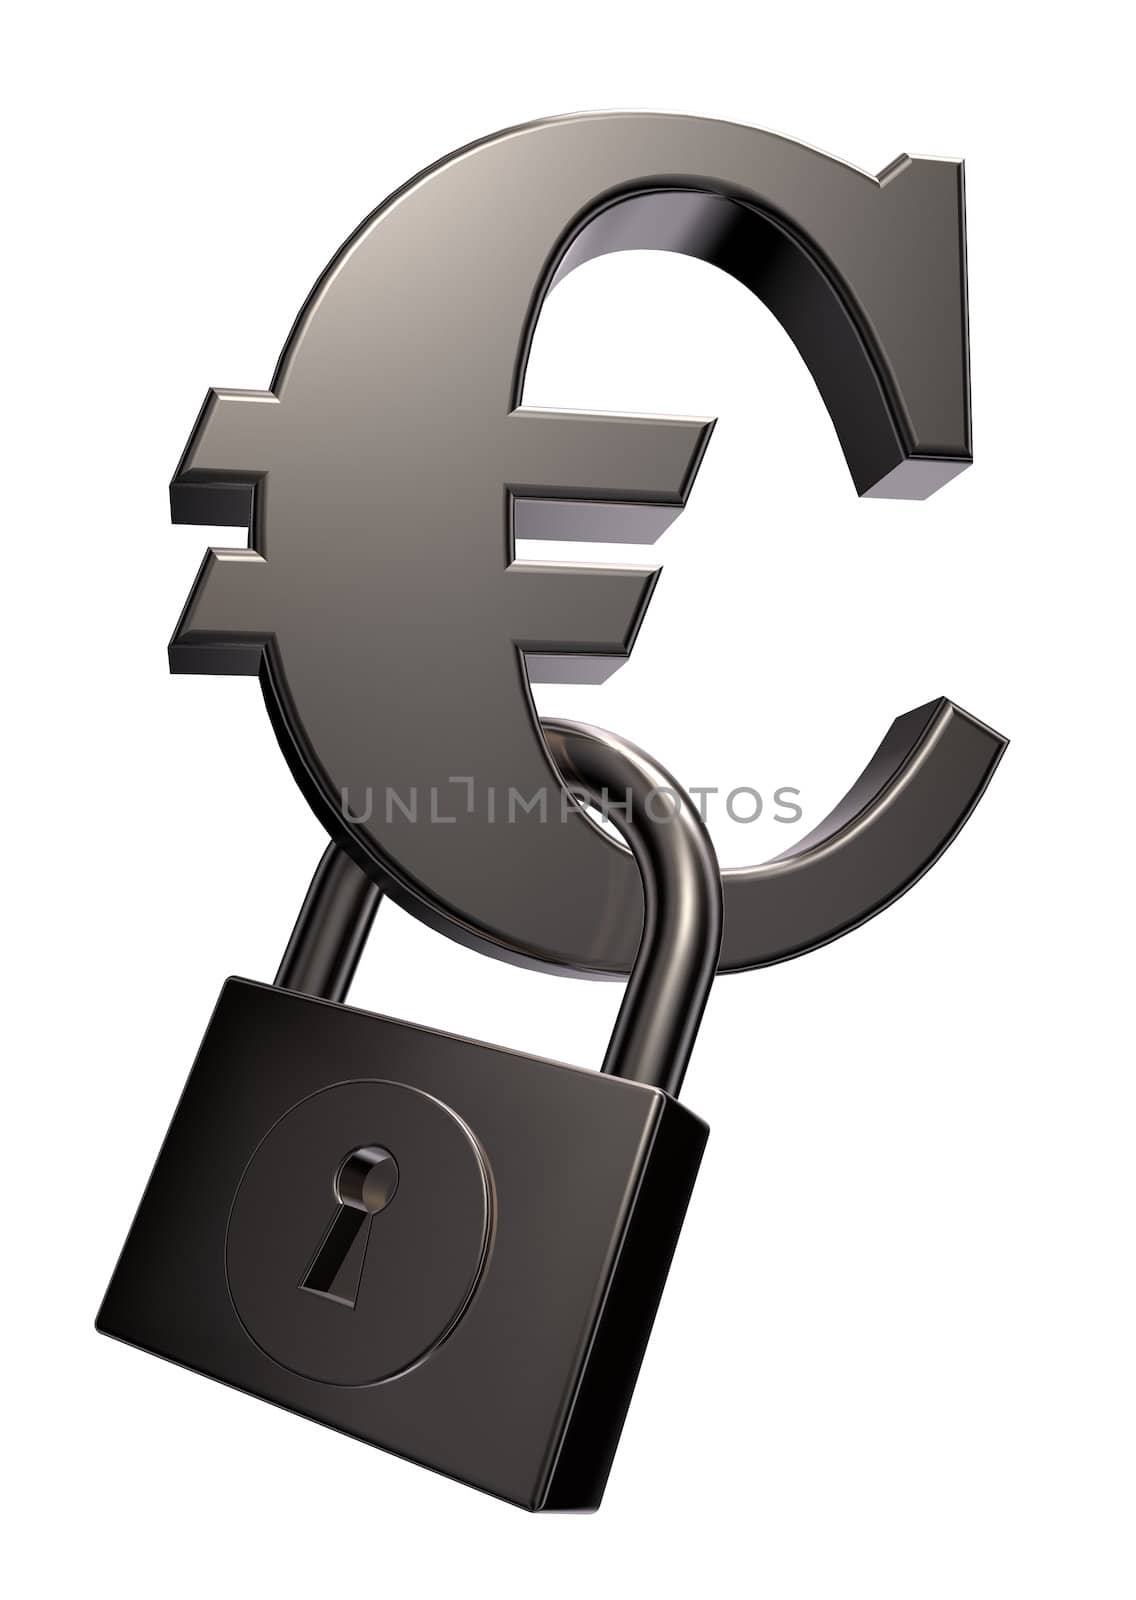 euro symbol and padlock - 3d illustration